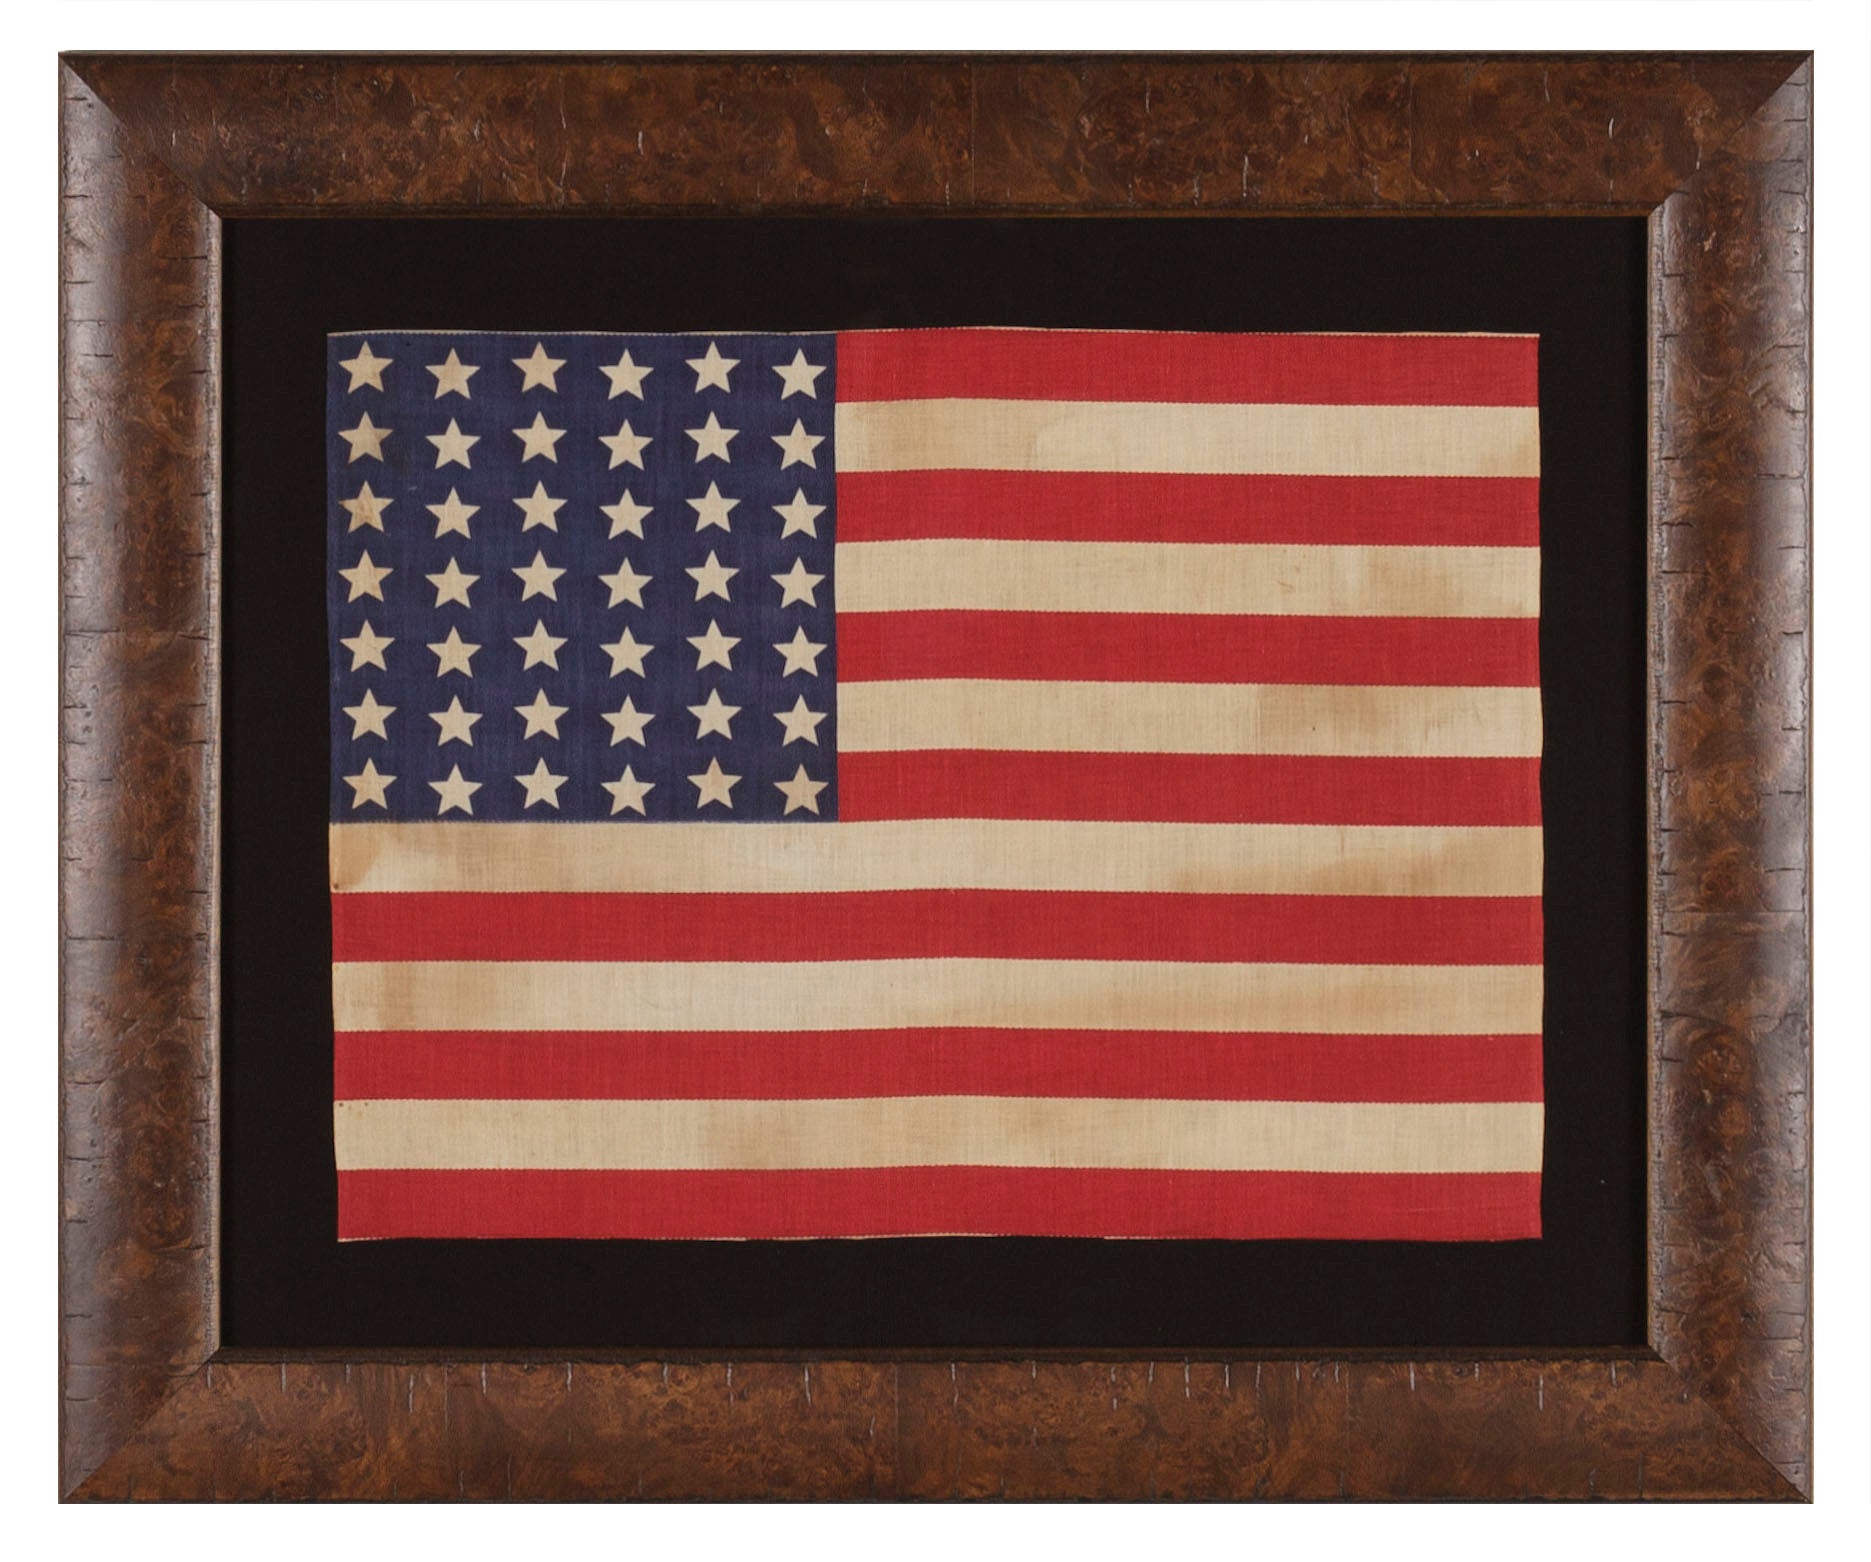 42 Star Antique American Flag, Wave Configuration, Washington Statehood, 1889-90